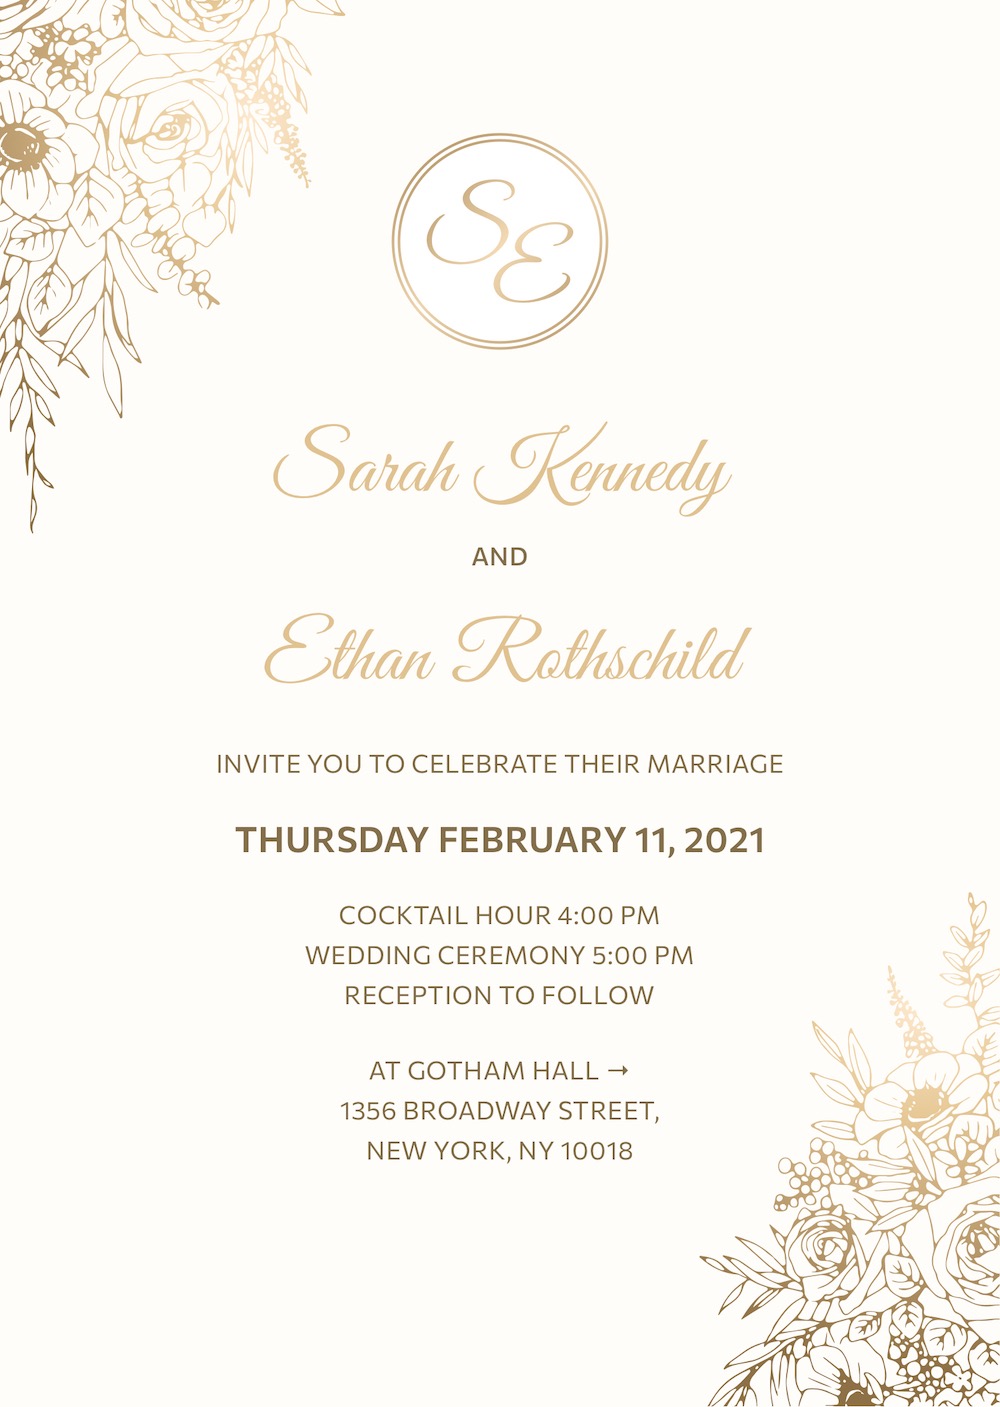 Luxury wedding bar mitzvah invitation with RSVP